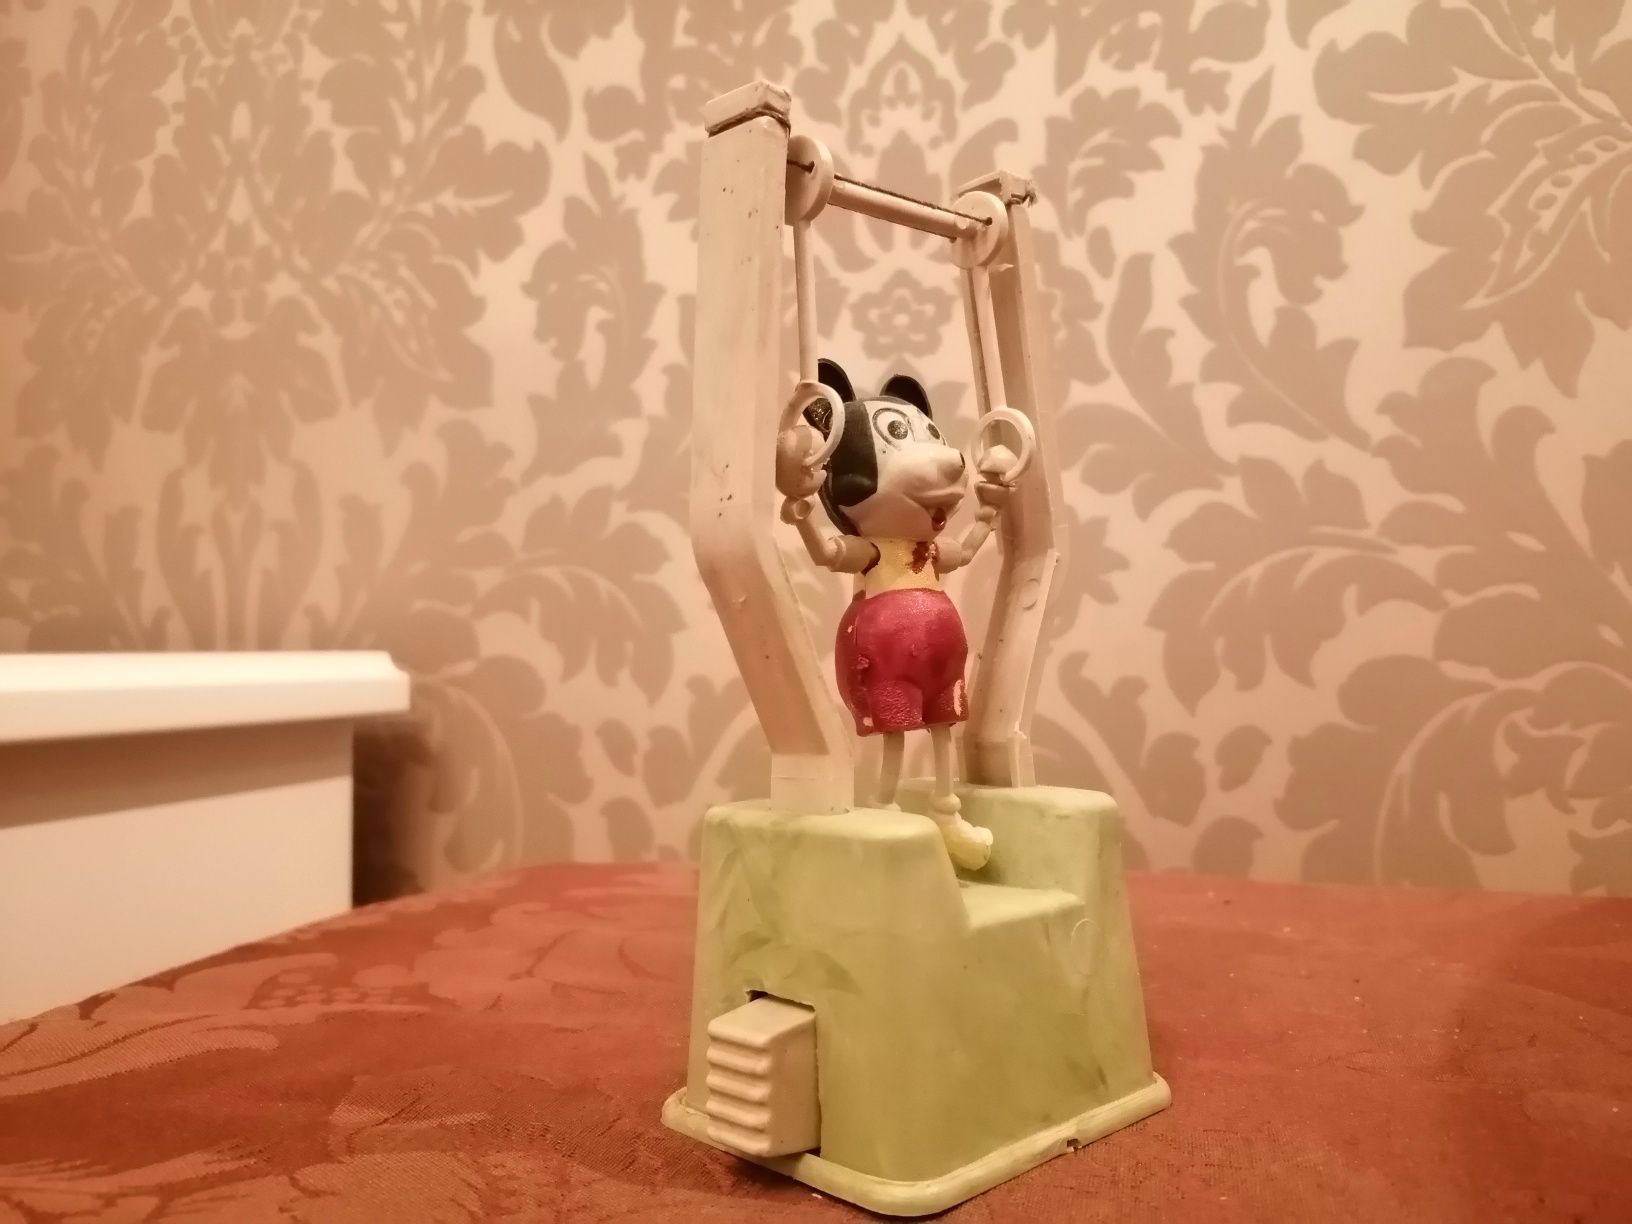 Myszka na trapezie - akrobatka zabawka z PRL-u